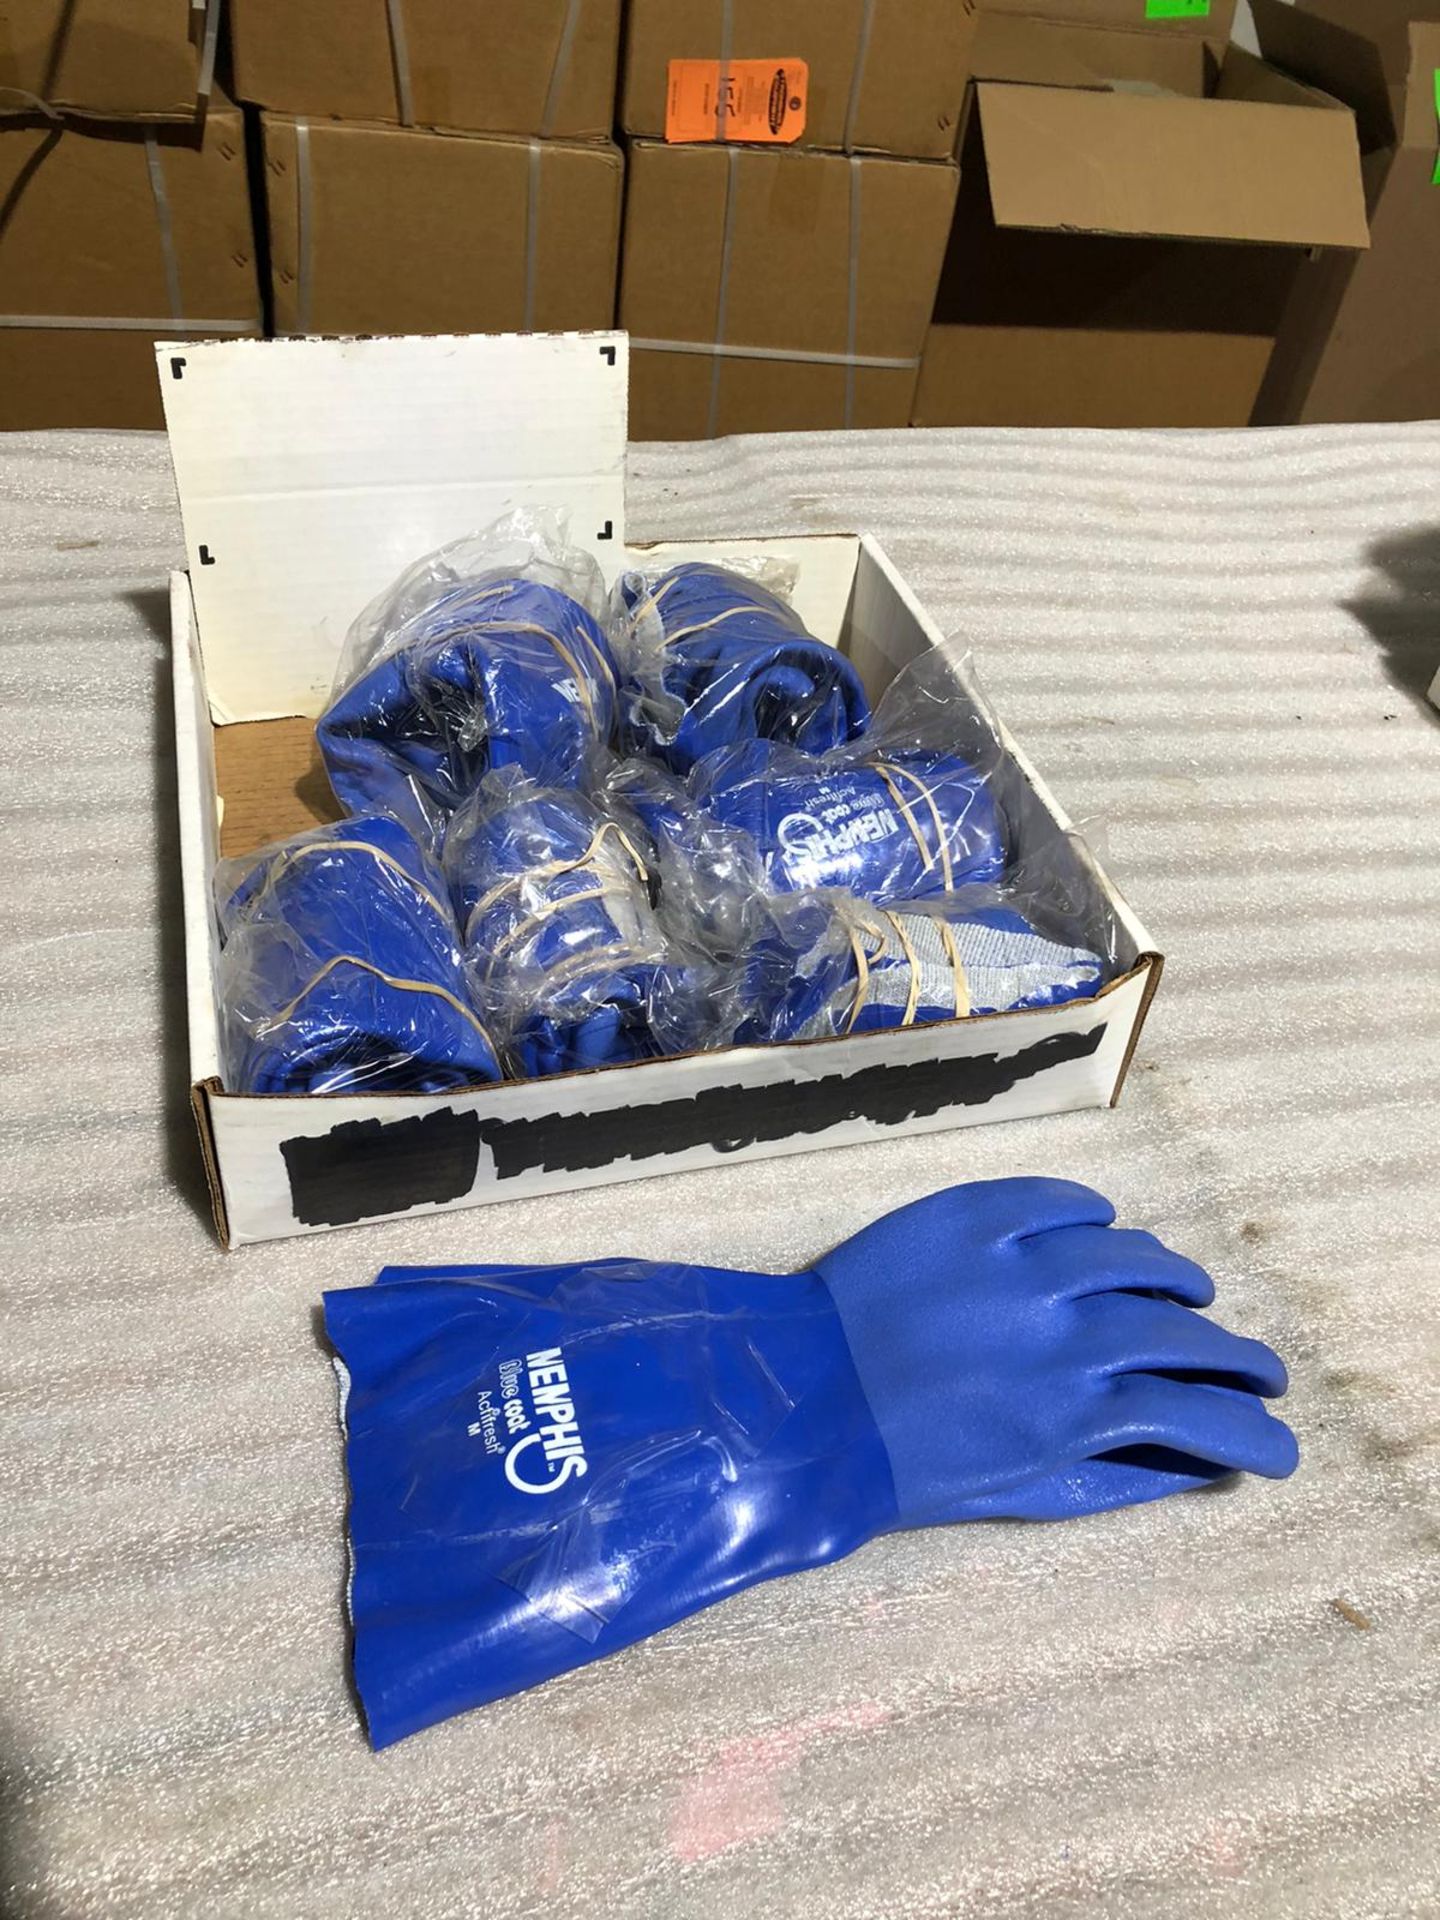 Memphis Blue Coat Waterproof Gloves - 7 pairs - Size M